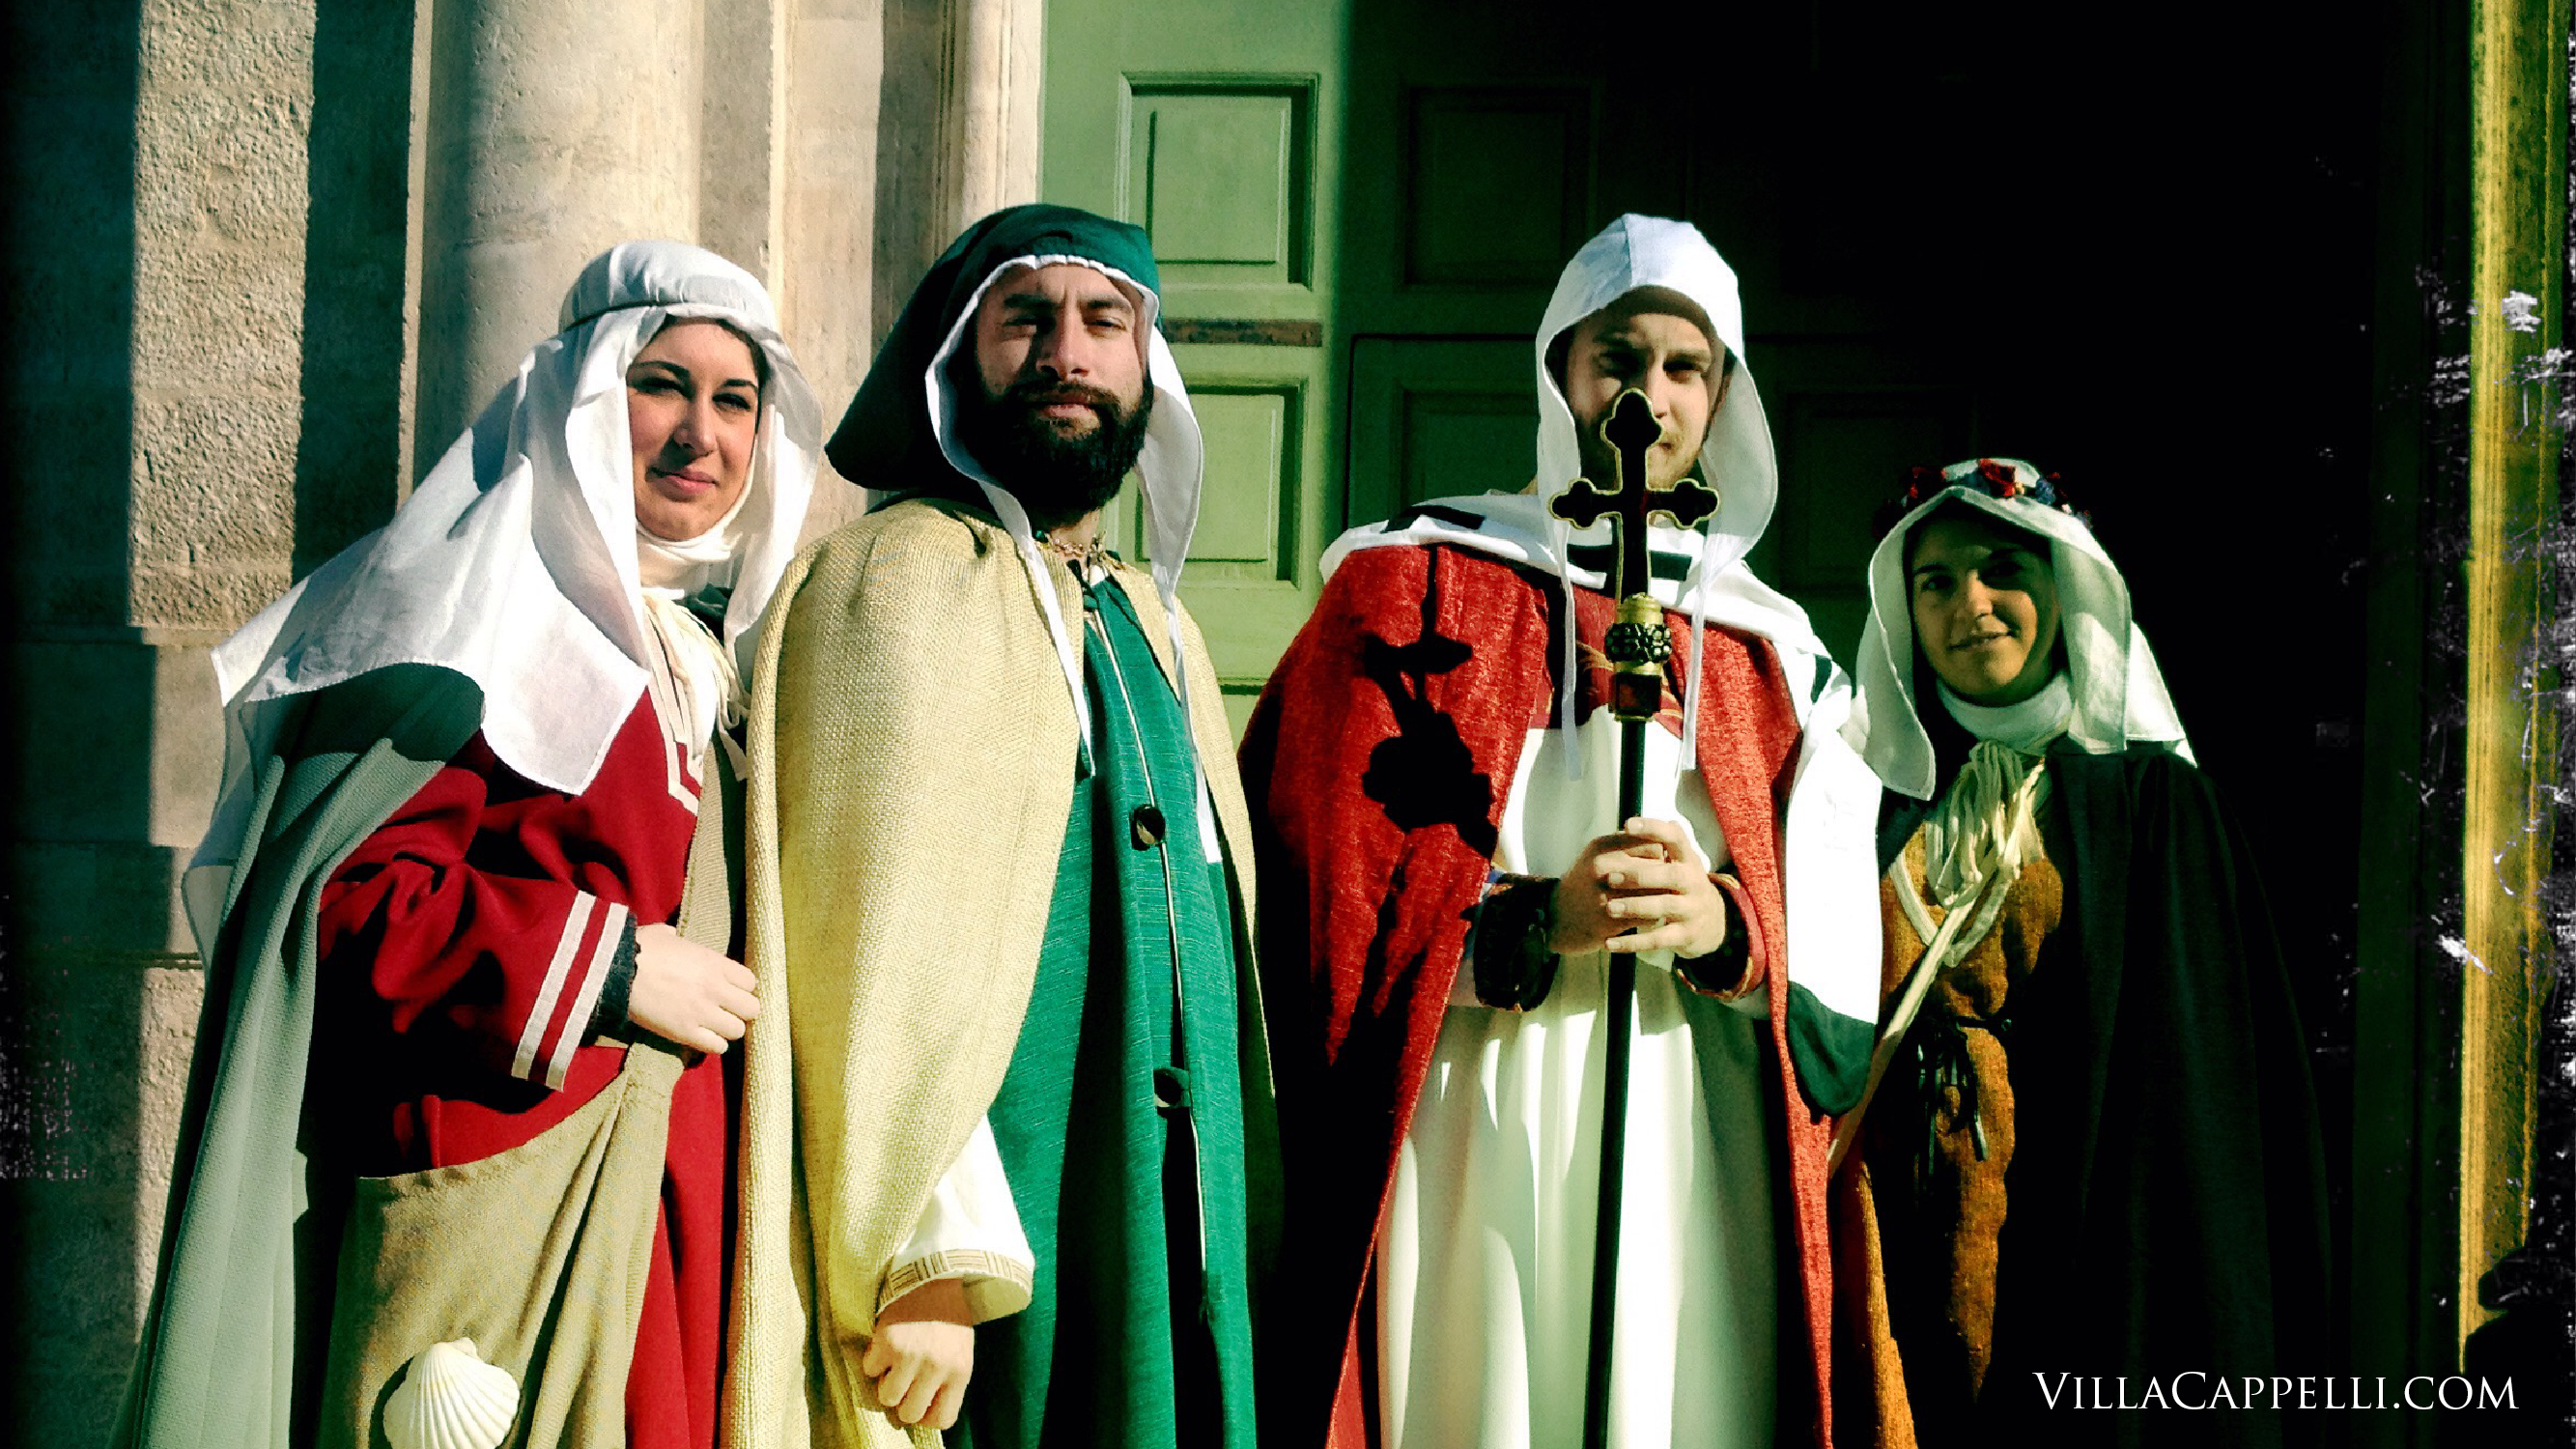 Some nativity actors.